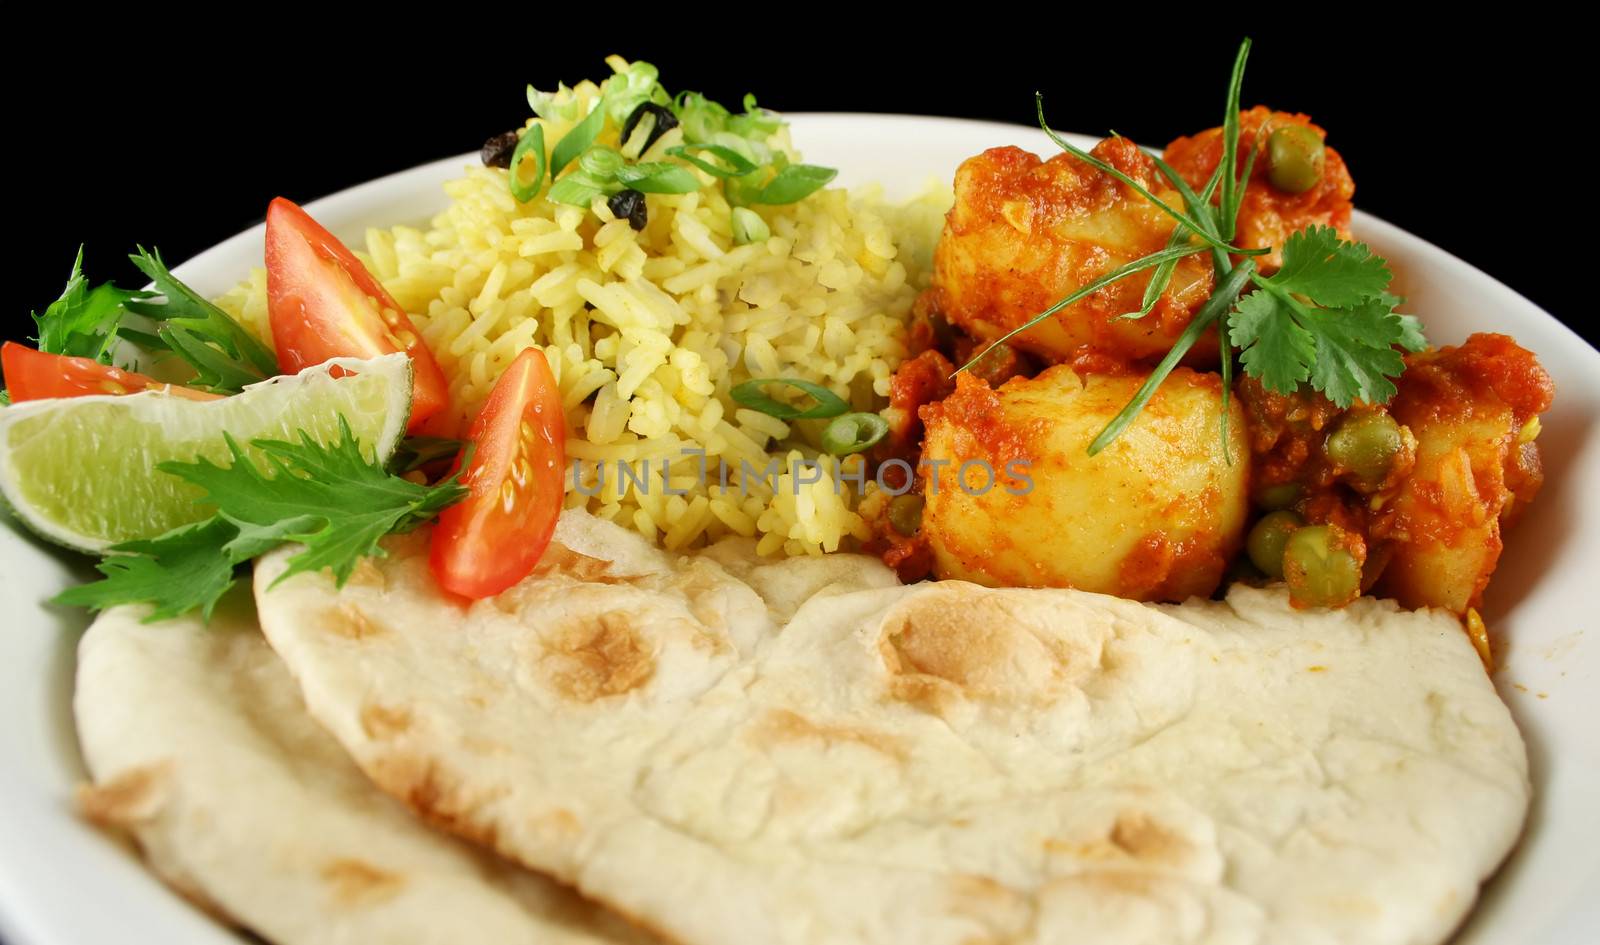 Indian Vegetarian Curry by jabiru